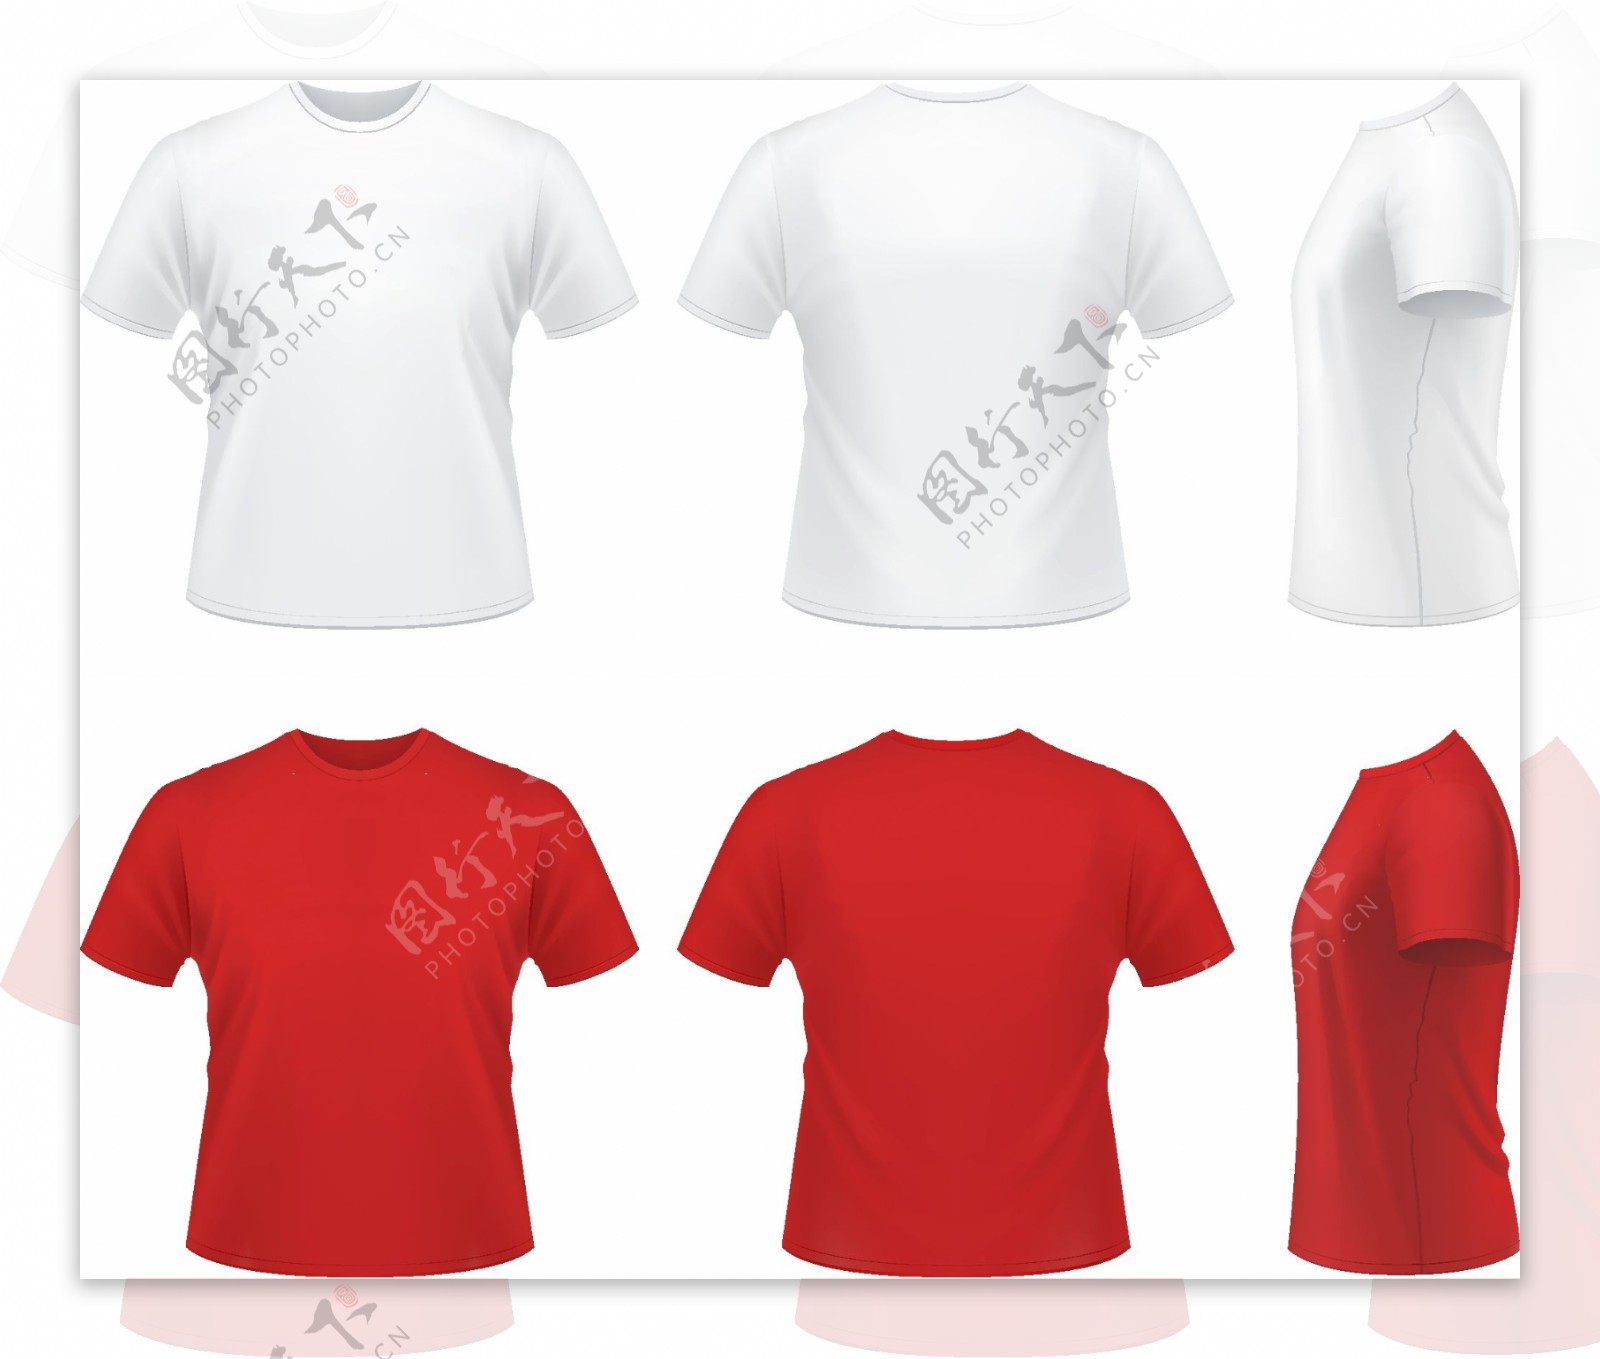 红色白色Tshirt矢量素材eps格式